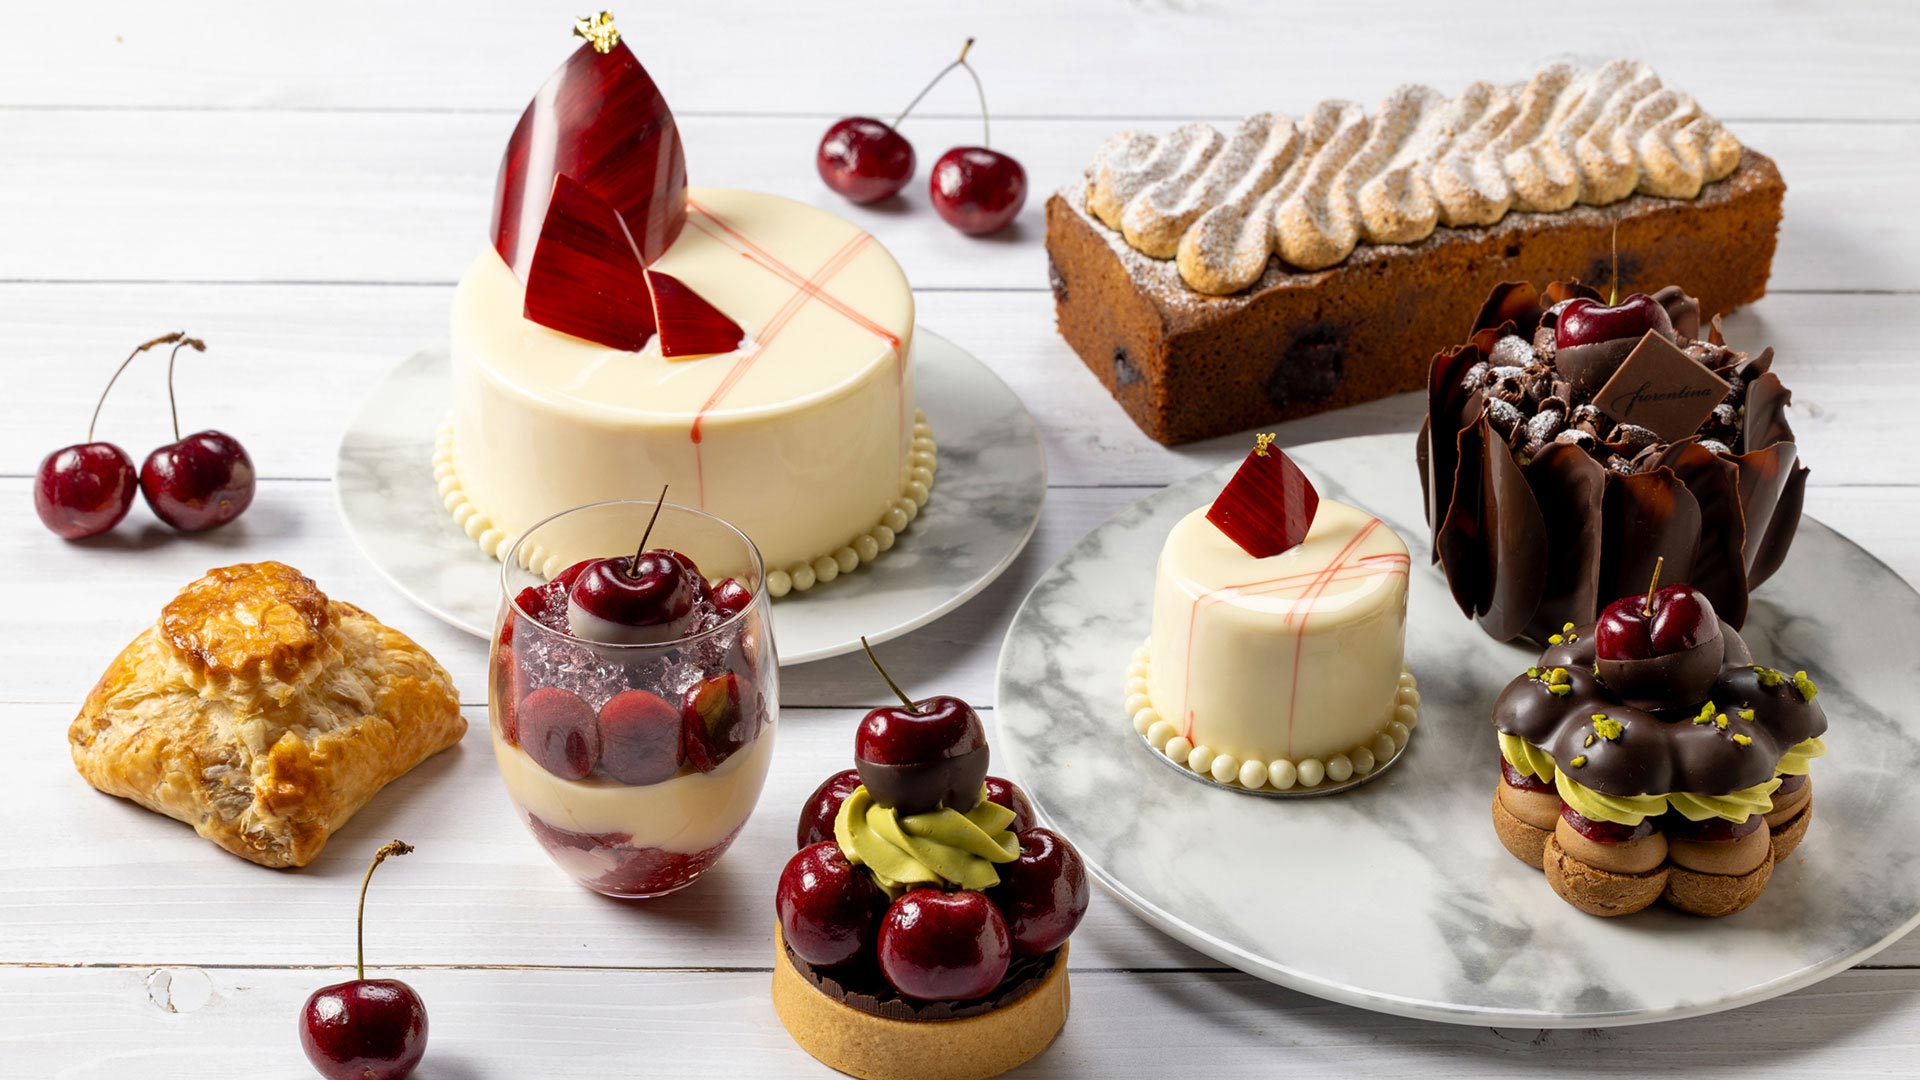 Variety of beautifully presented cherry desserts